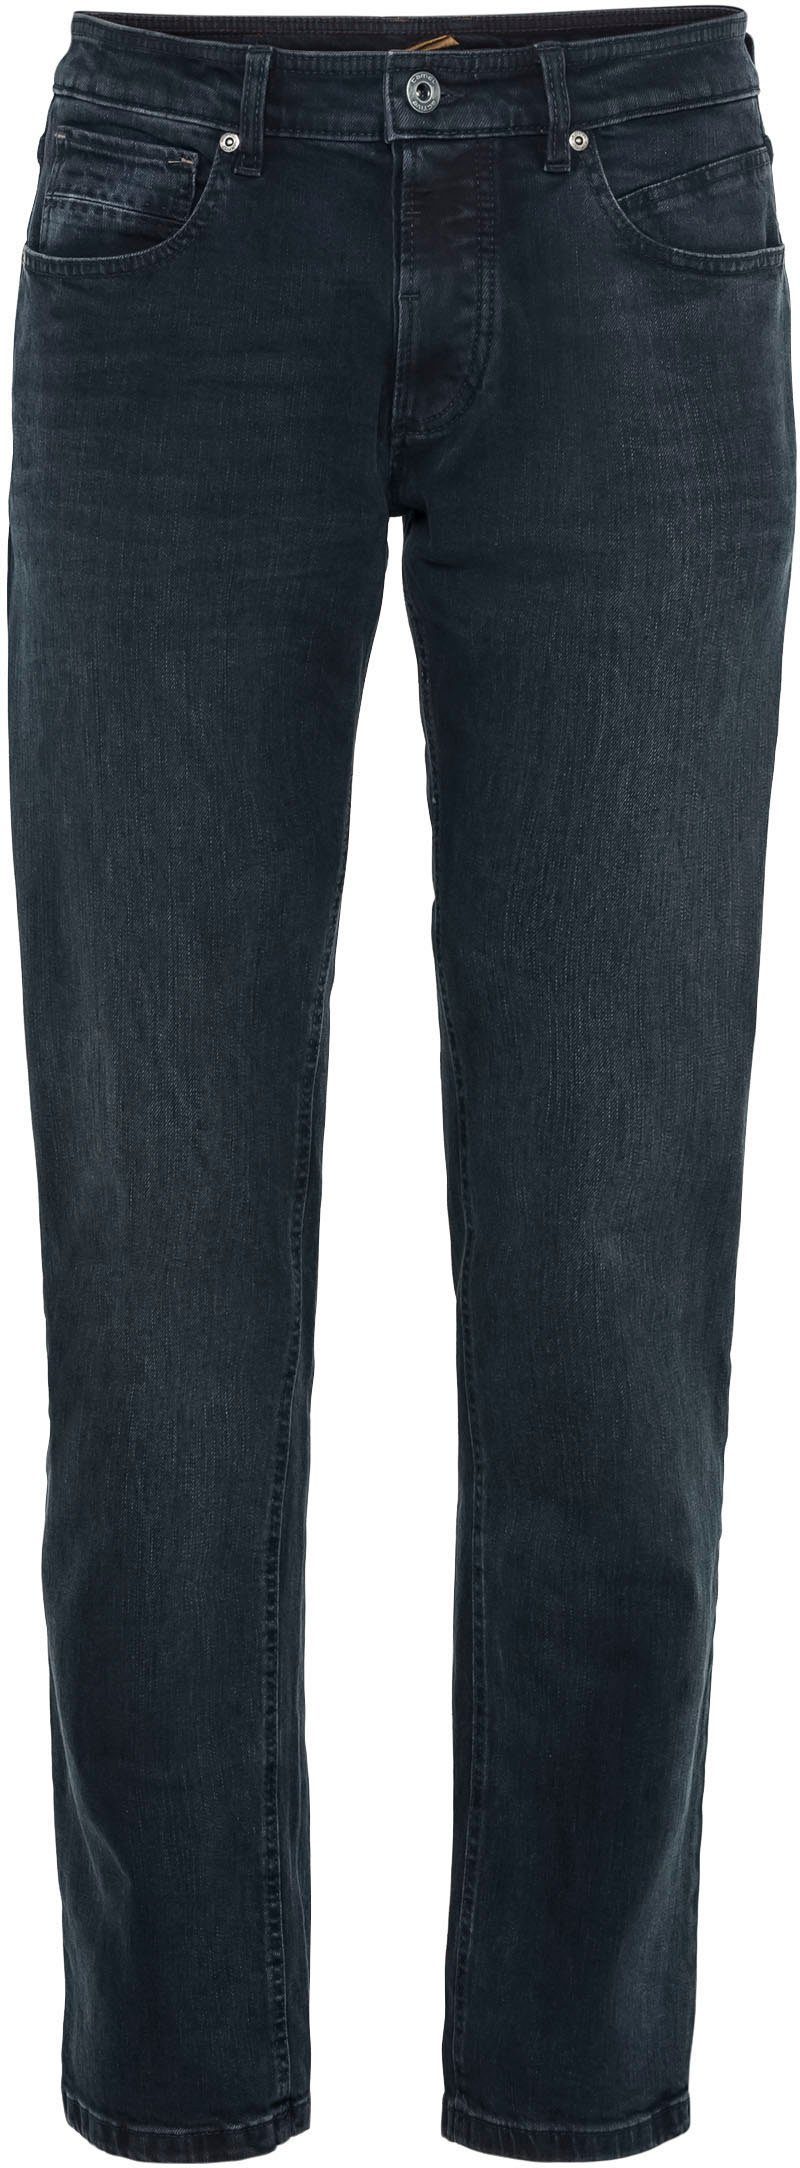 camel active 5-Pocket-Jeans »WOODSTOCK« kaufen | OTTO